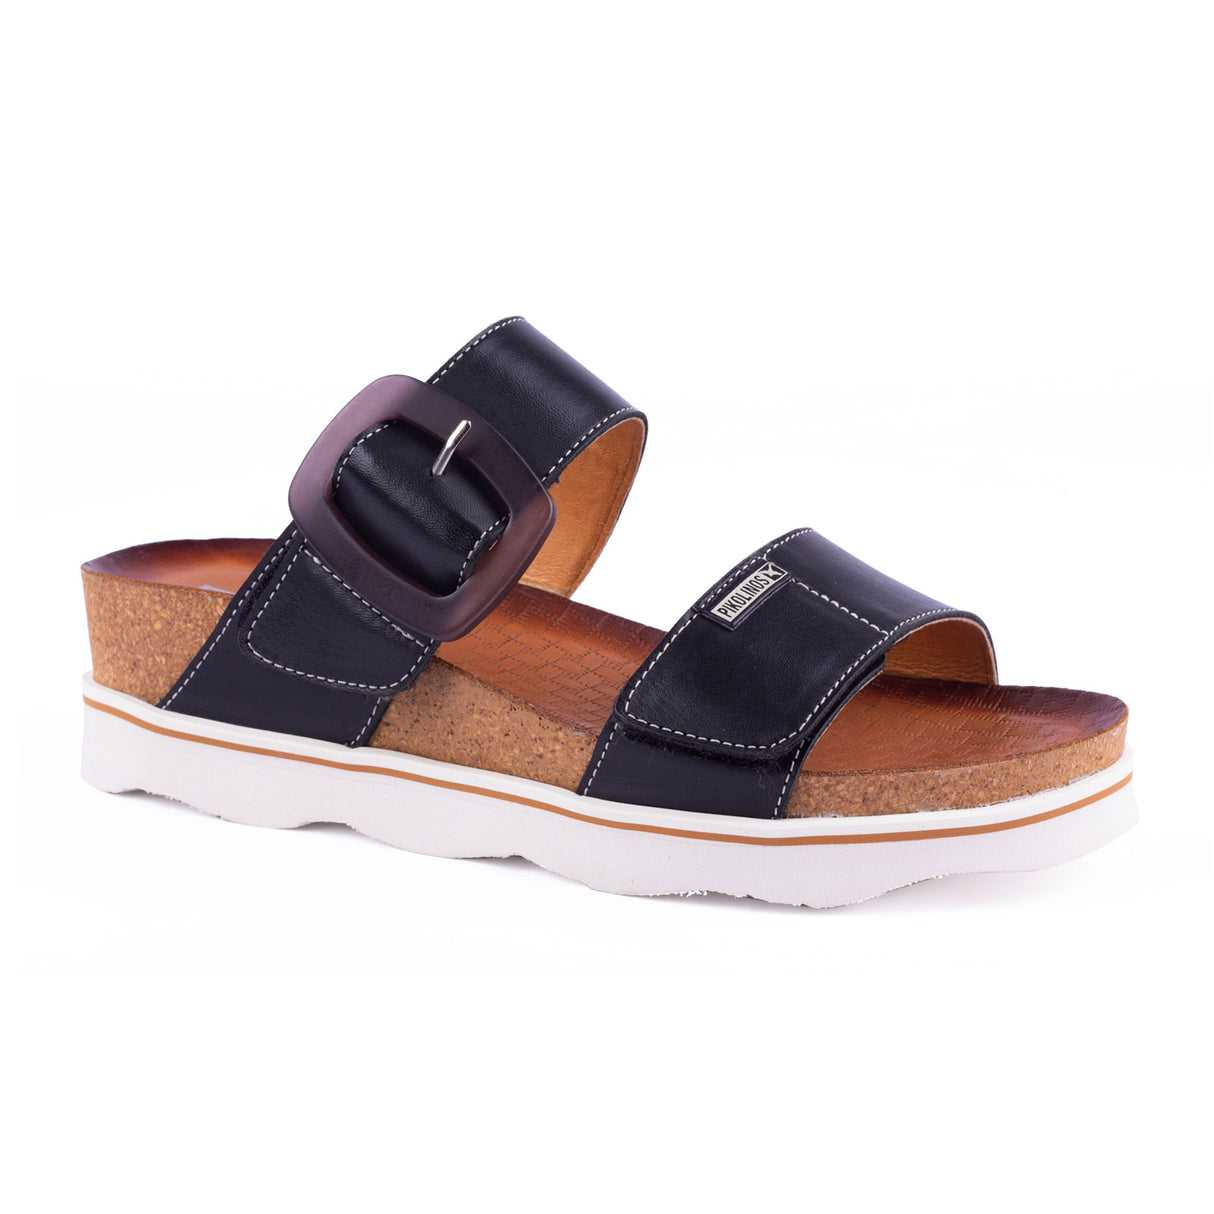 Pikolinos Menorca W6E-0596 Slide Sandal (Women) - Black Sandals - Wedge - The Heel Shoe Fitters